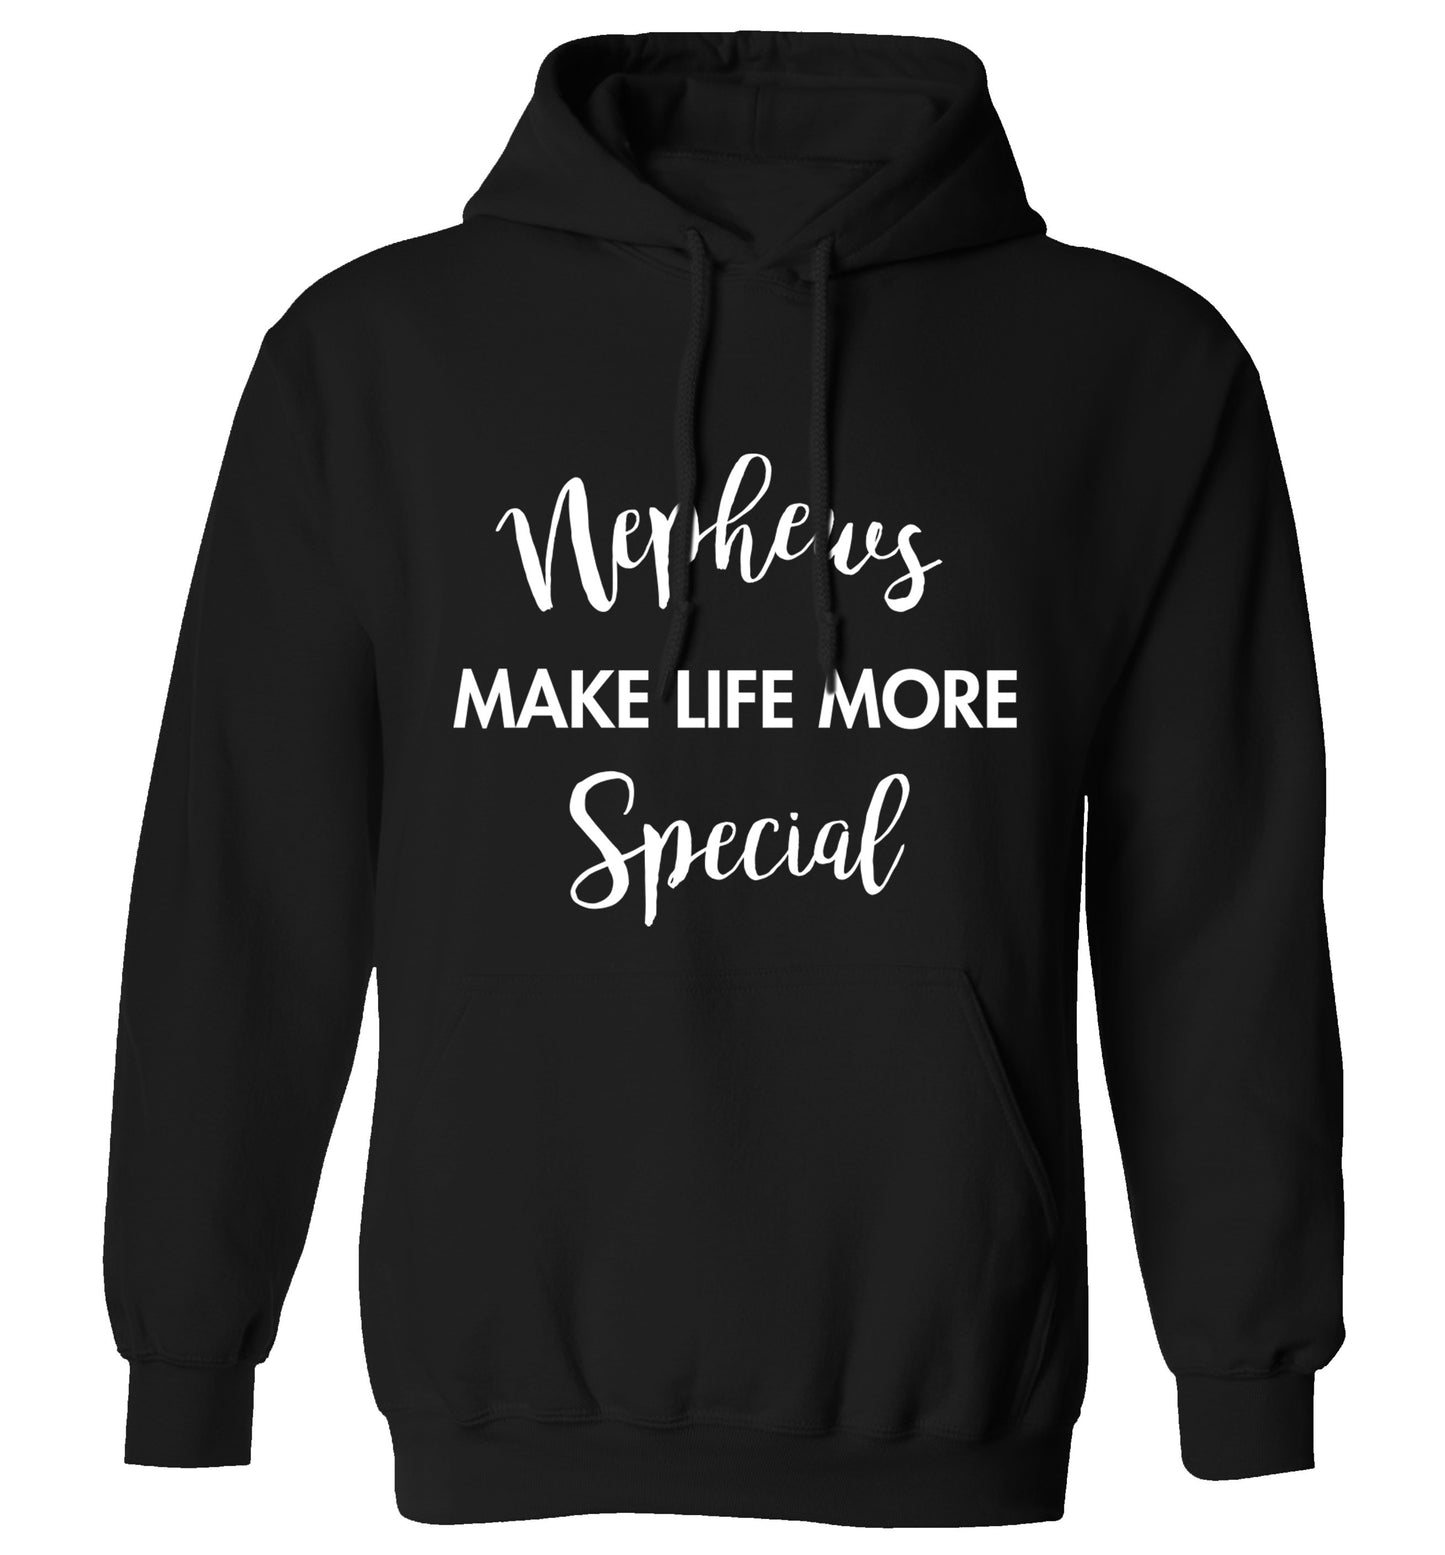 Nephews make life more special adults unisex black hoodie 2XL